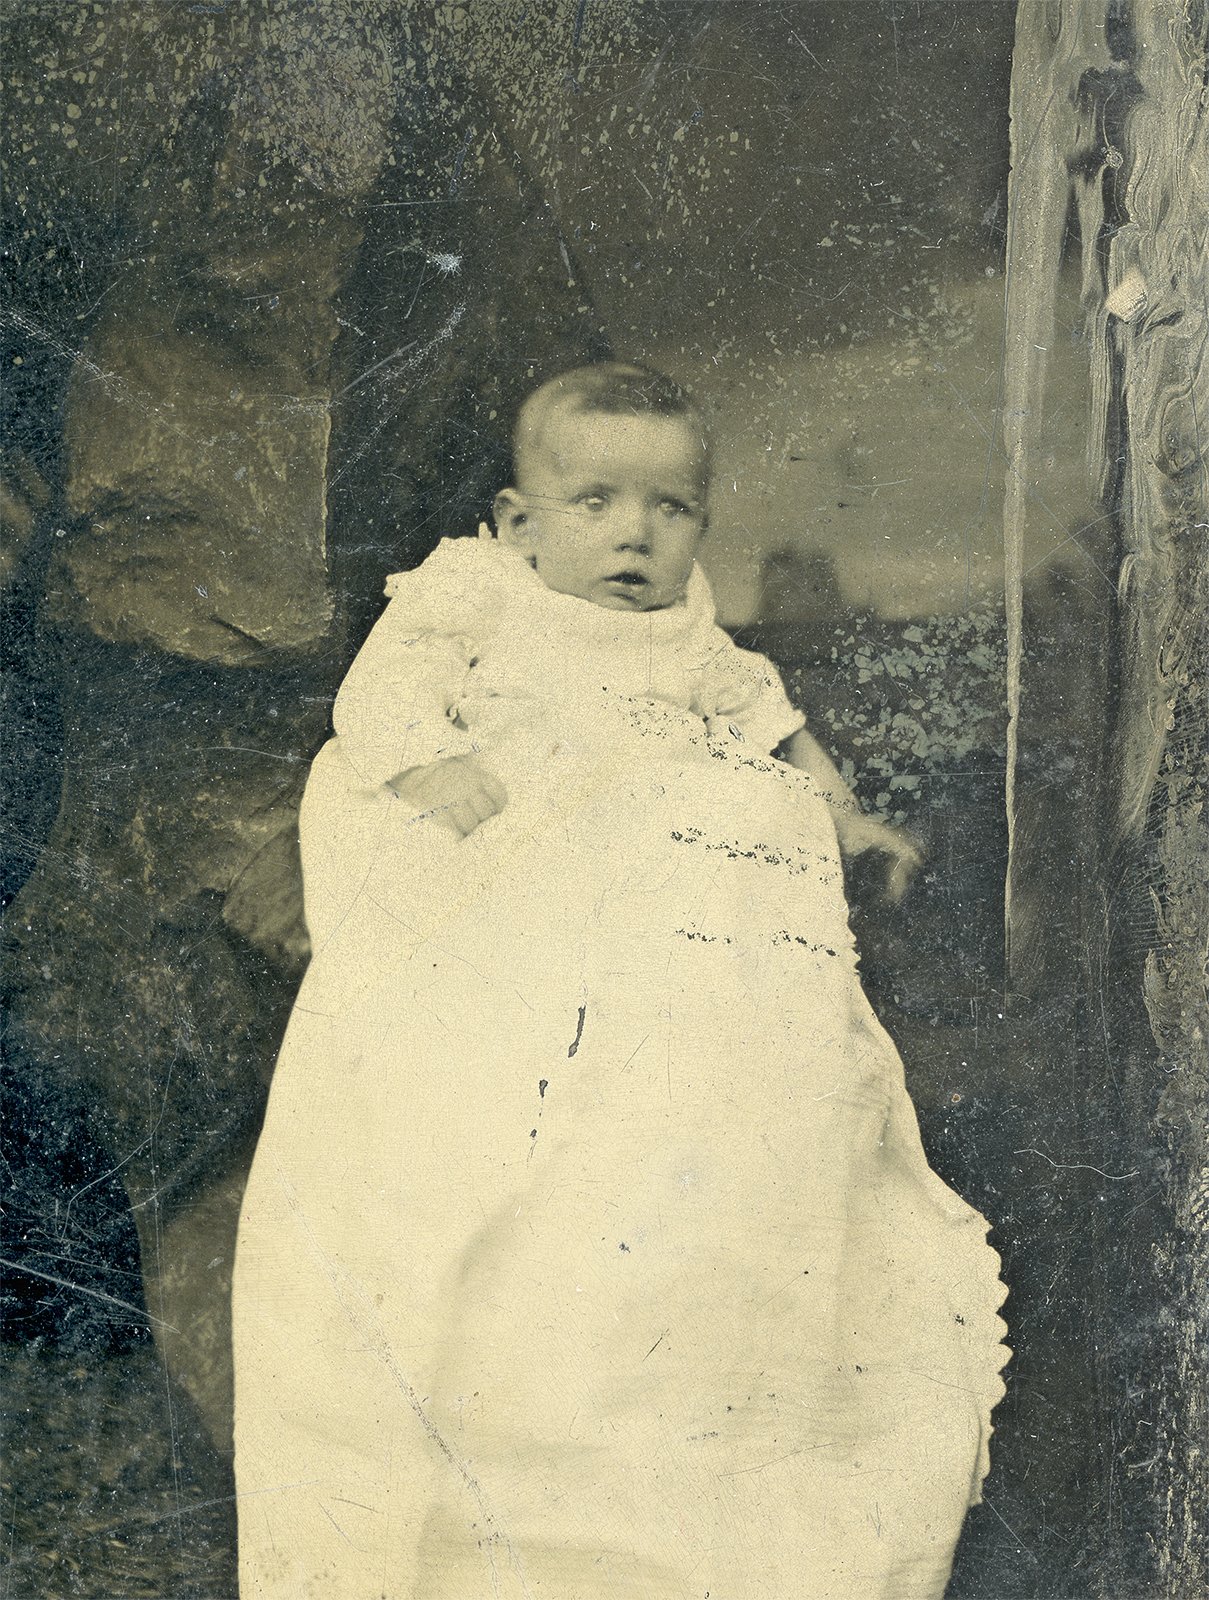 Christening photograph of Thomas Brown, maternal grandfather of Chris Murray, c. 1880.